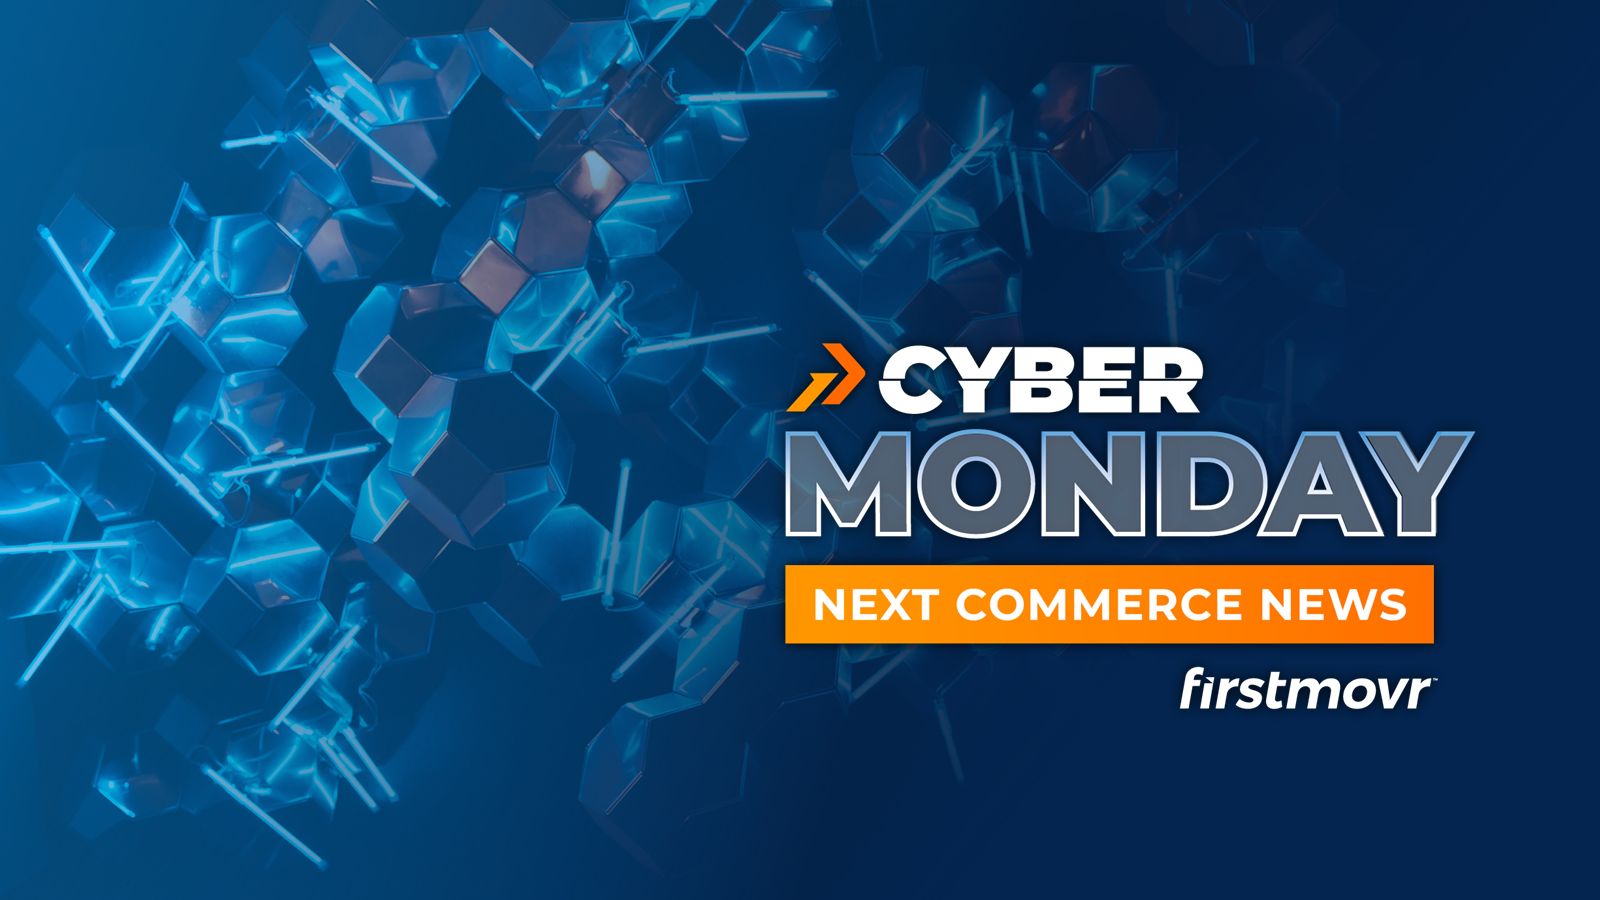 CYBER MONDAY / Next Commerce News - firstmovr